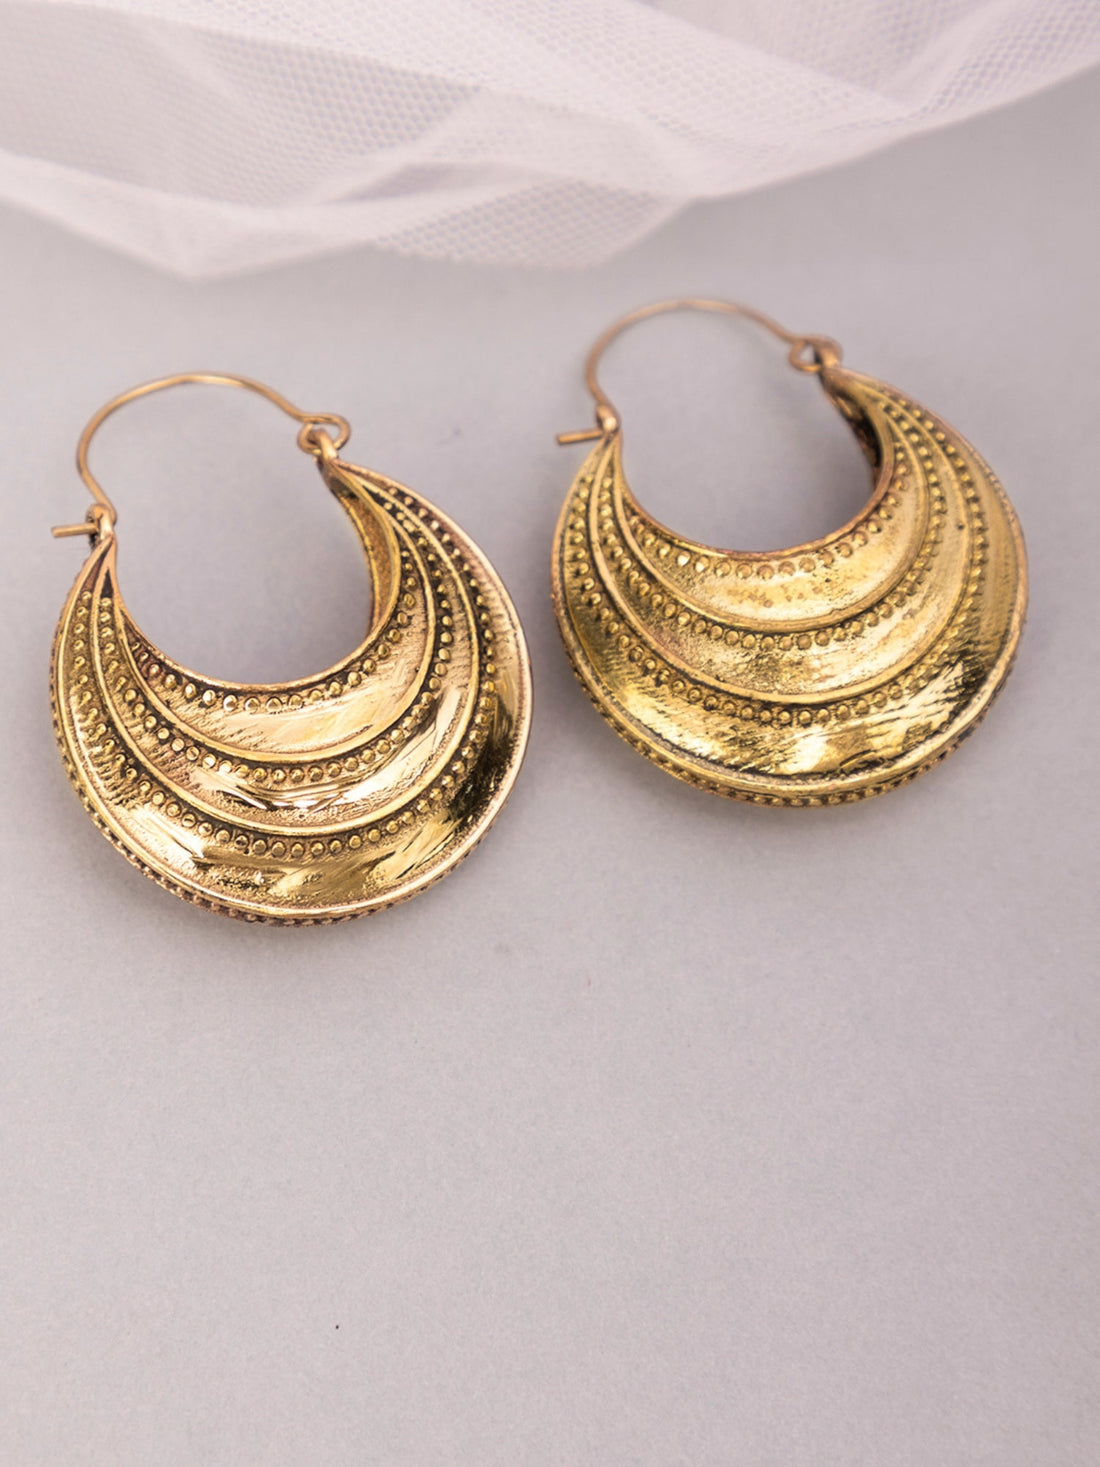 Daily Wear Chandbalis Earrings - Traditional Gold-Plated Brass Earrings By Studio One Love